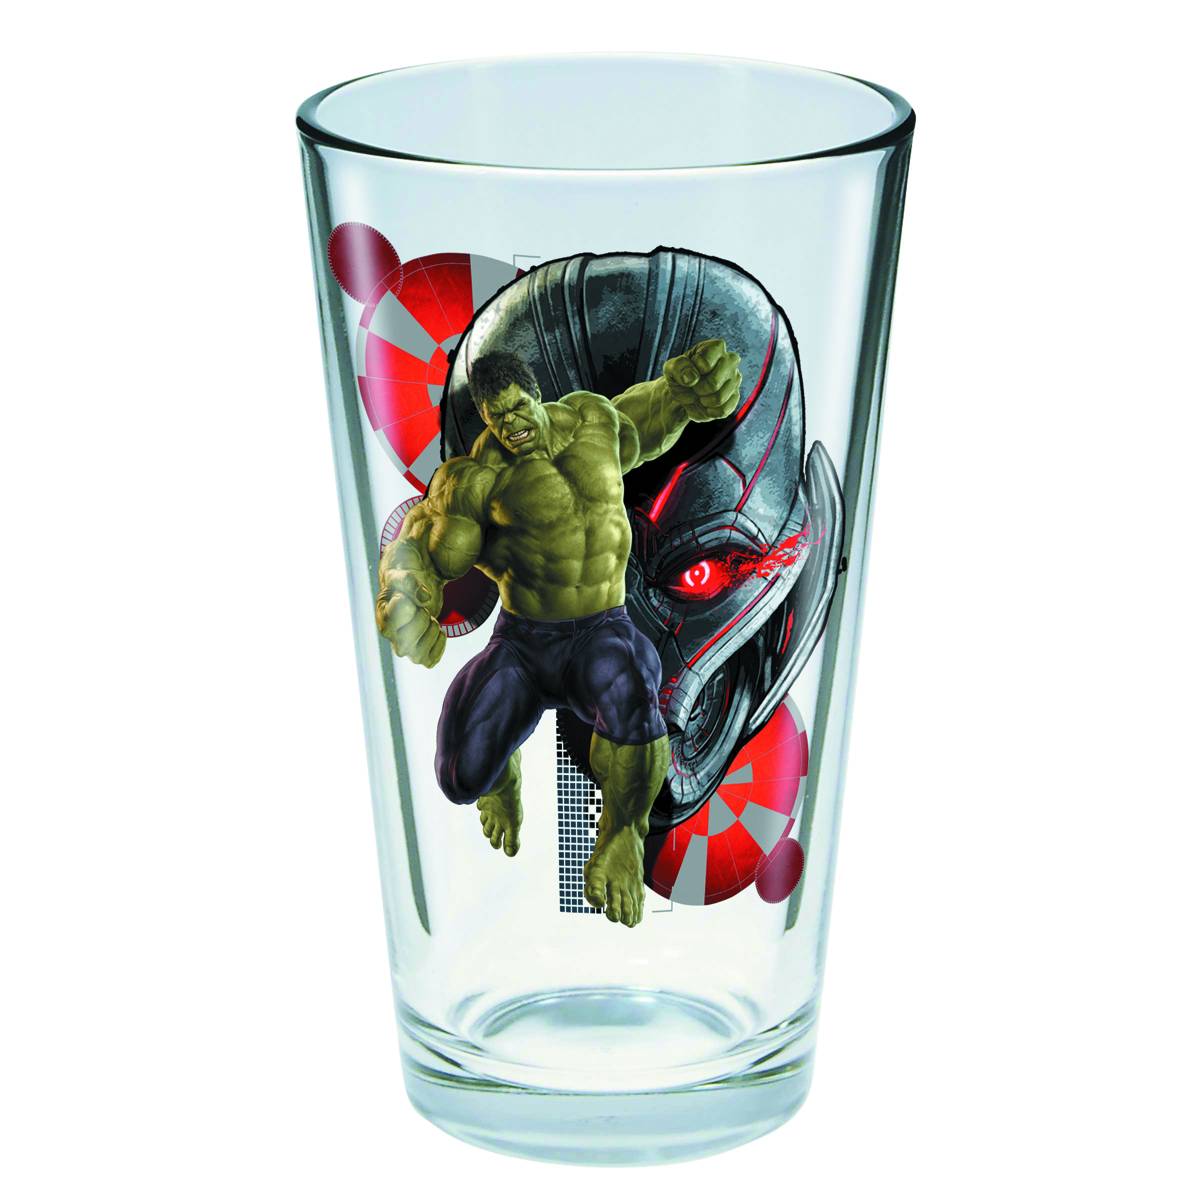 Avengers Age of Ultron Hulkbuster Toon Tumbler Pint Glass